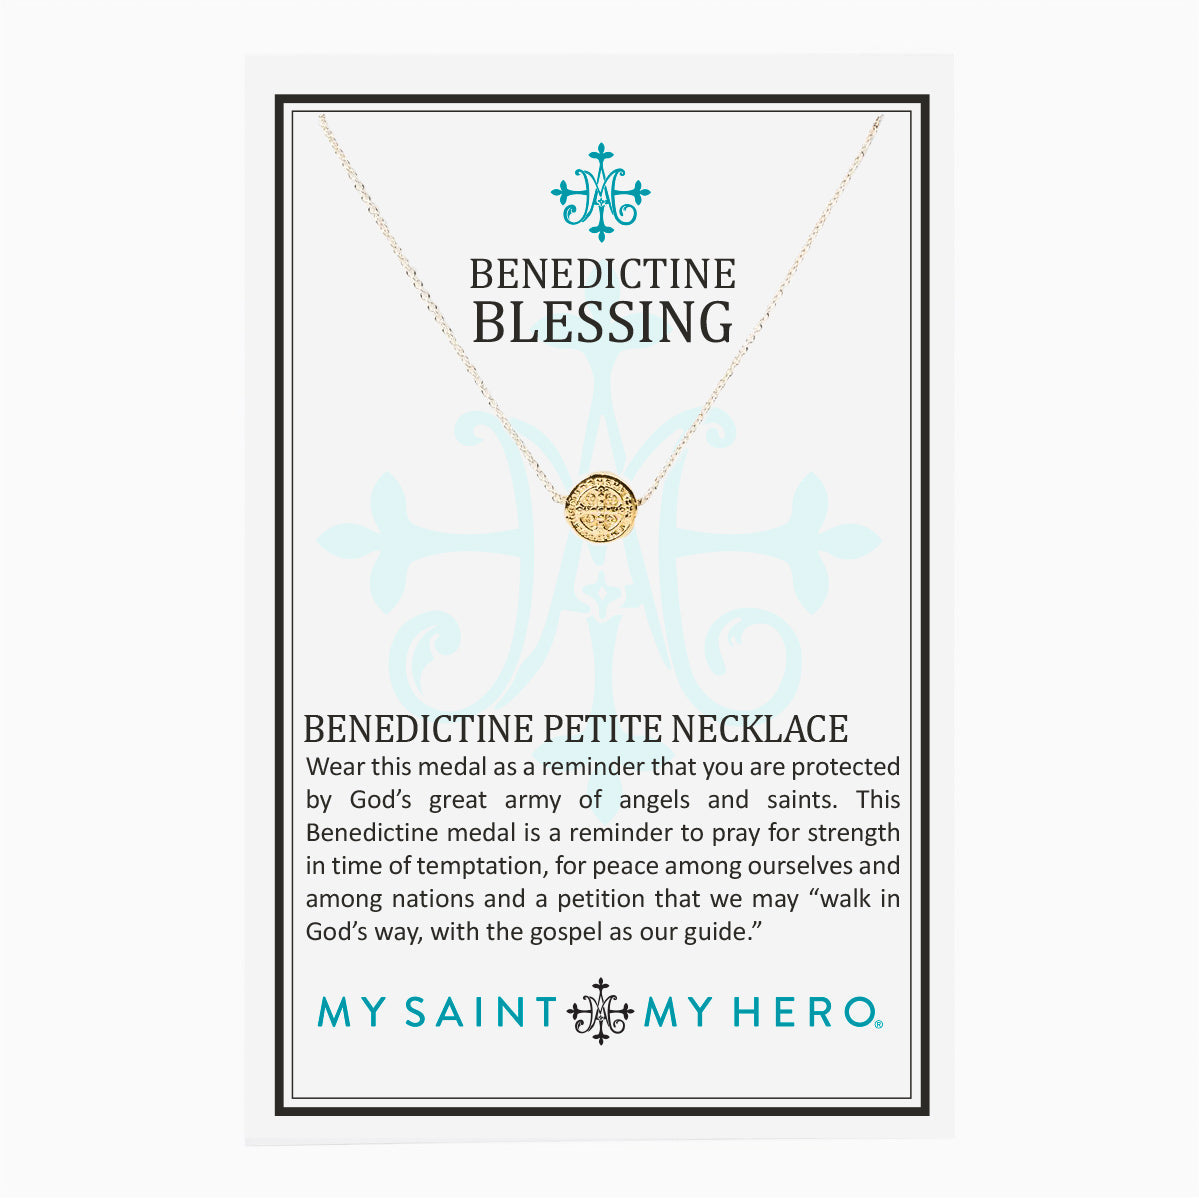 Benedictine Blessing Petite Necklace